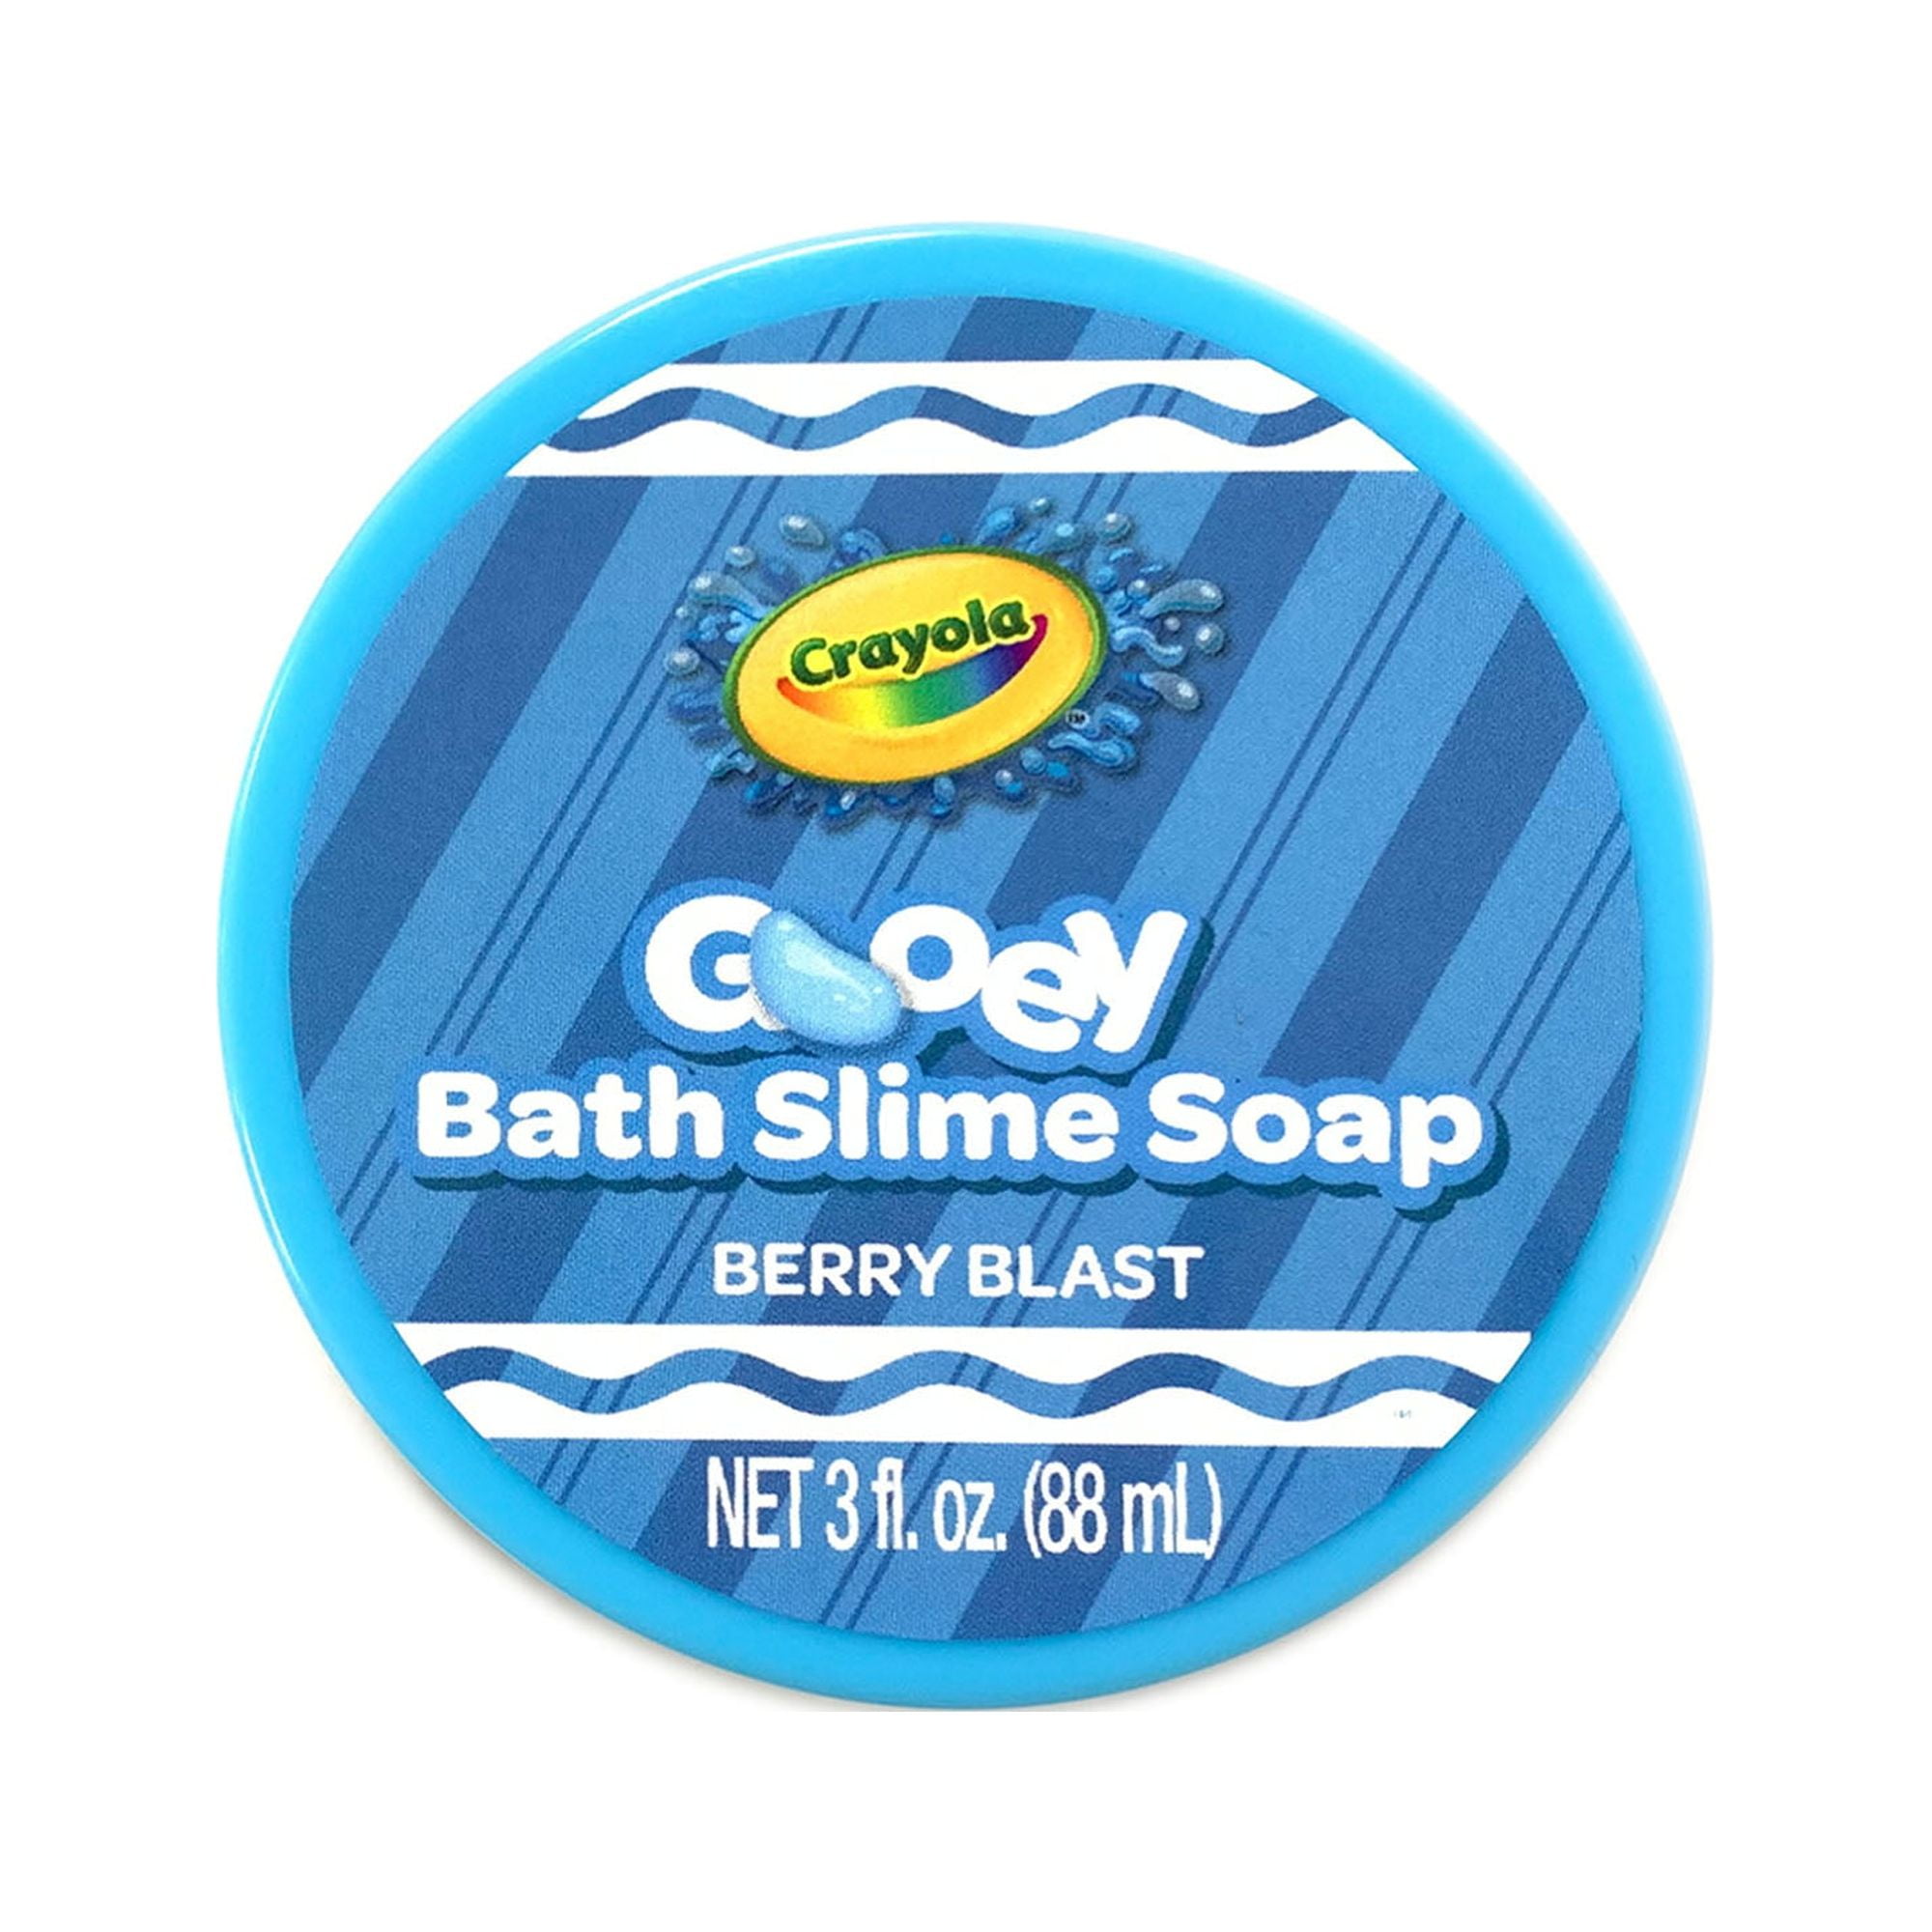 Crayola Gooey Bath Slime Soap, Berry Blast, 3 fl. Oz